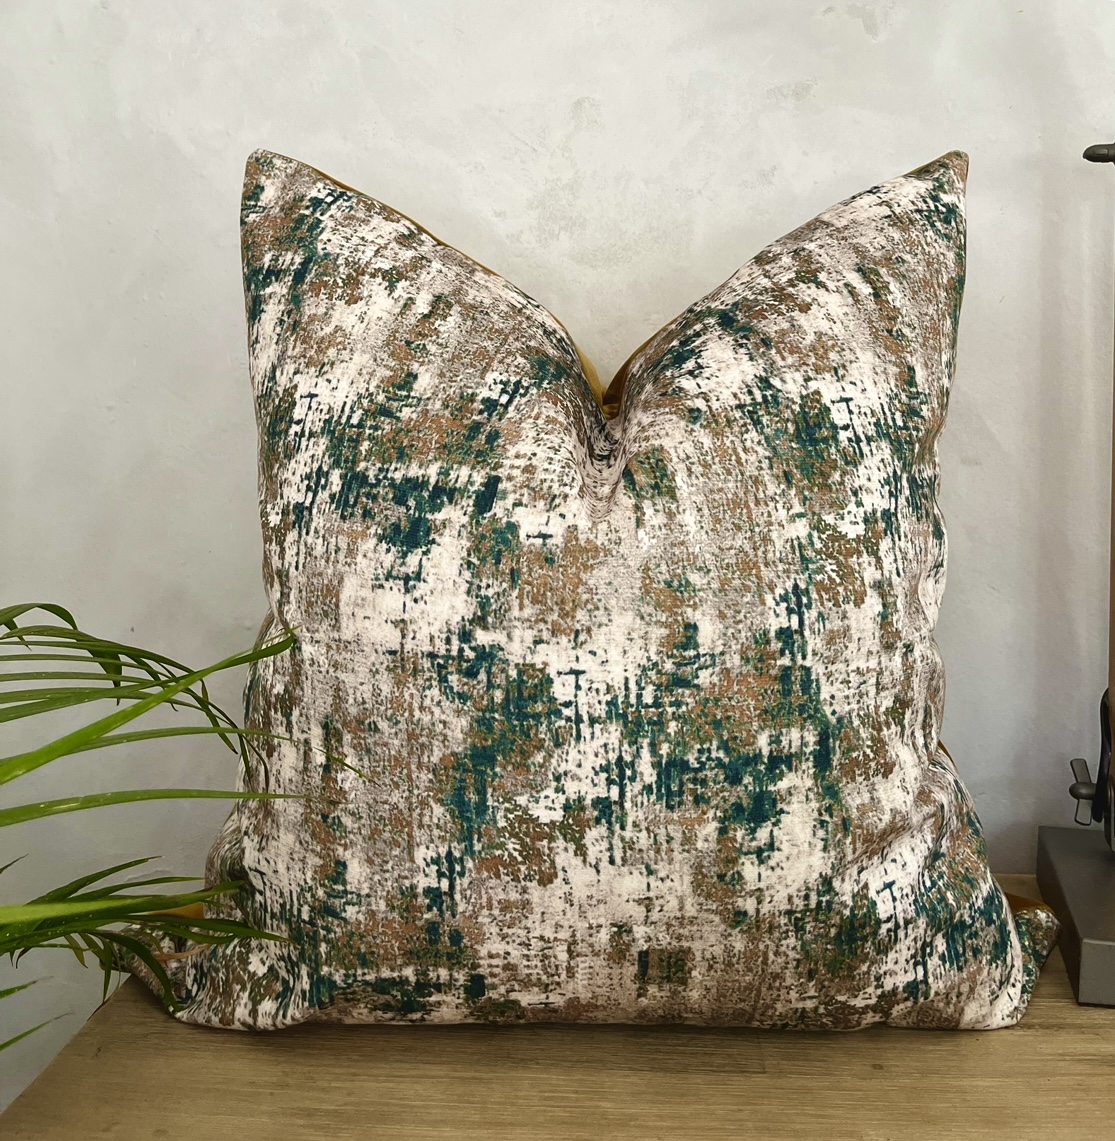 Abstract Cream_Green cushion